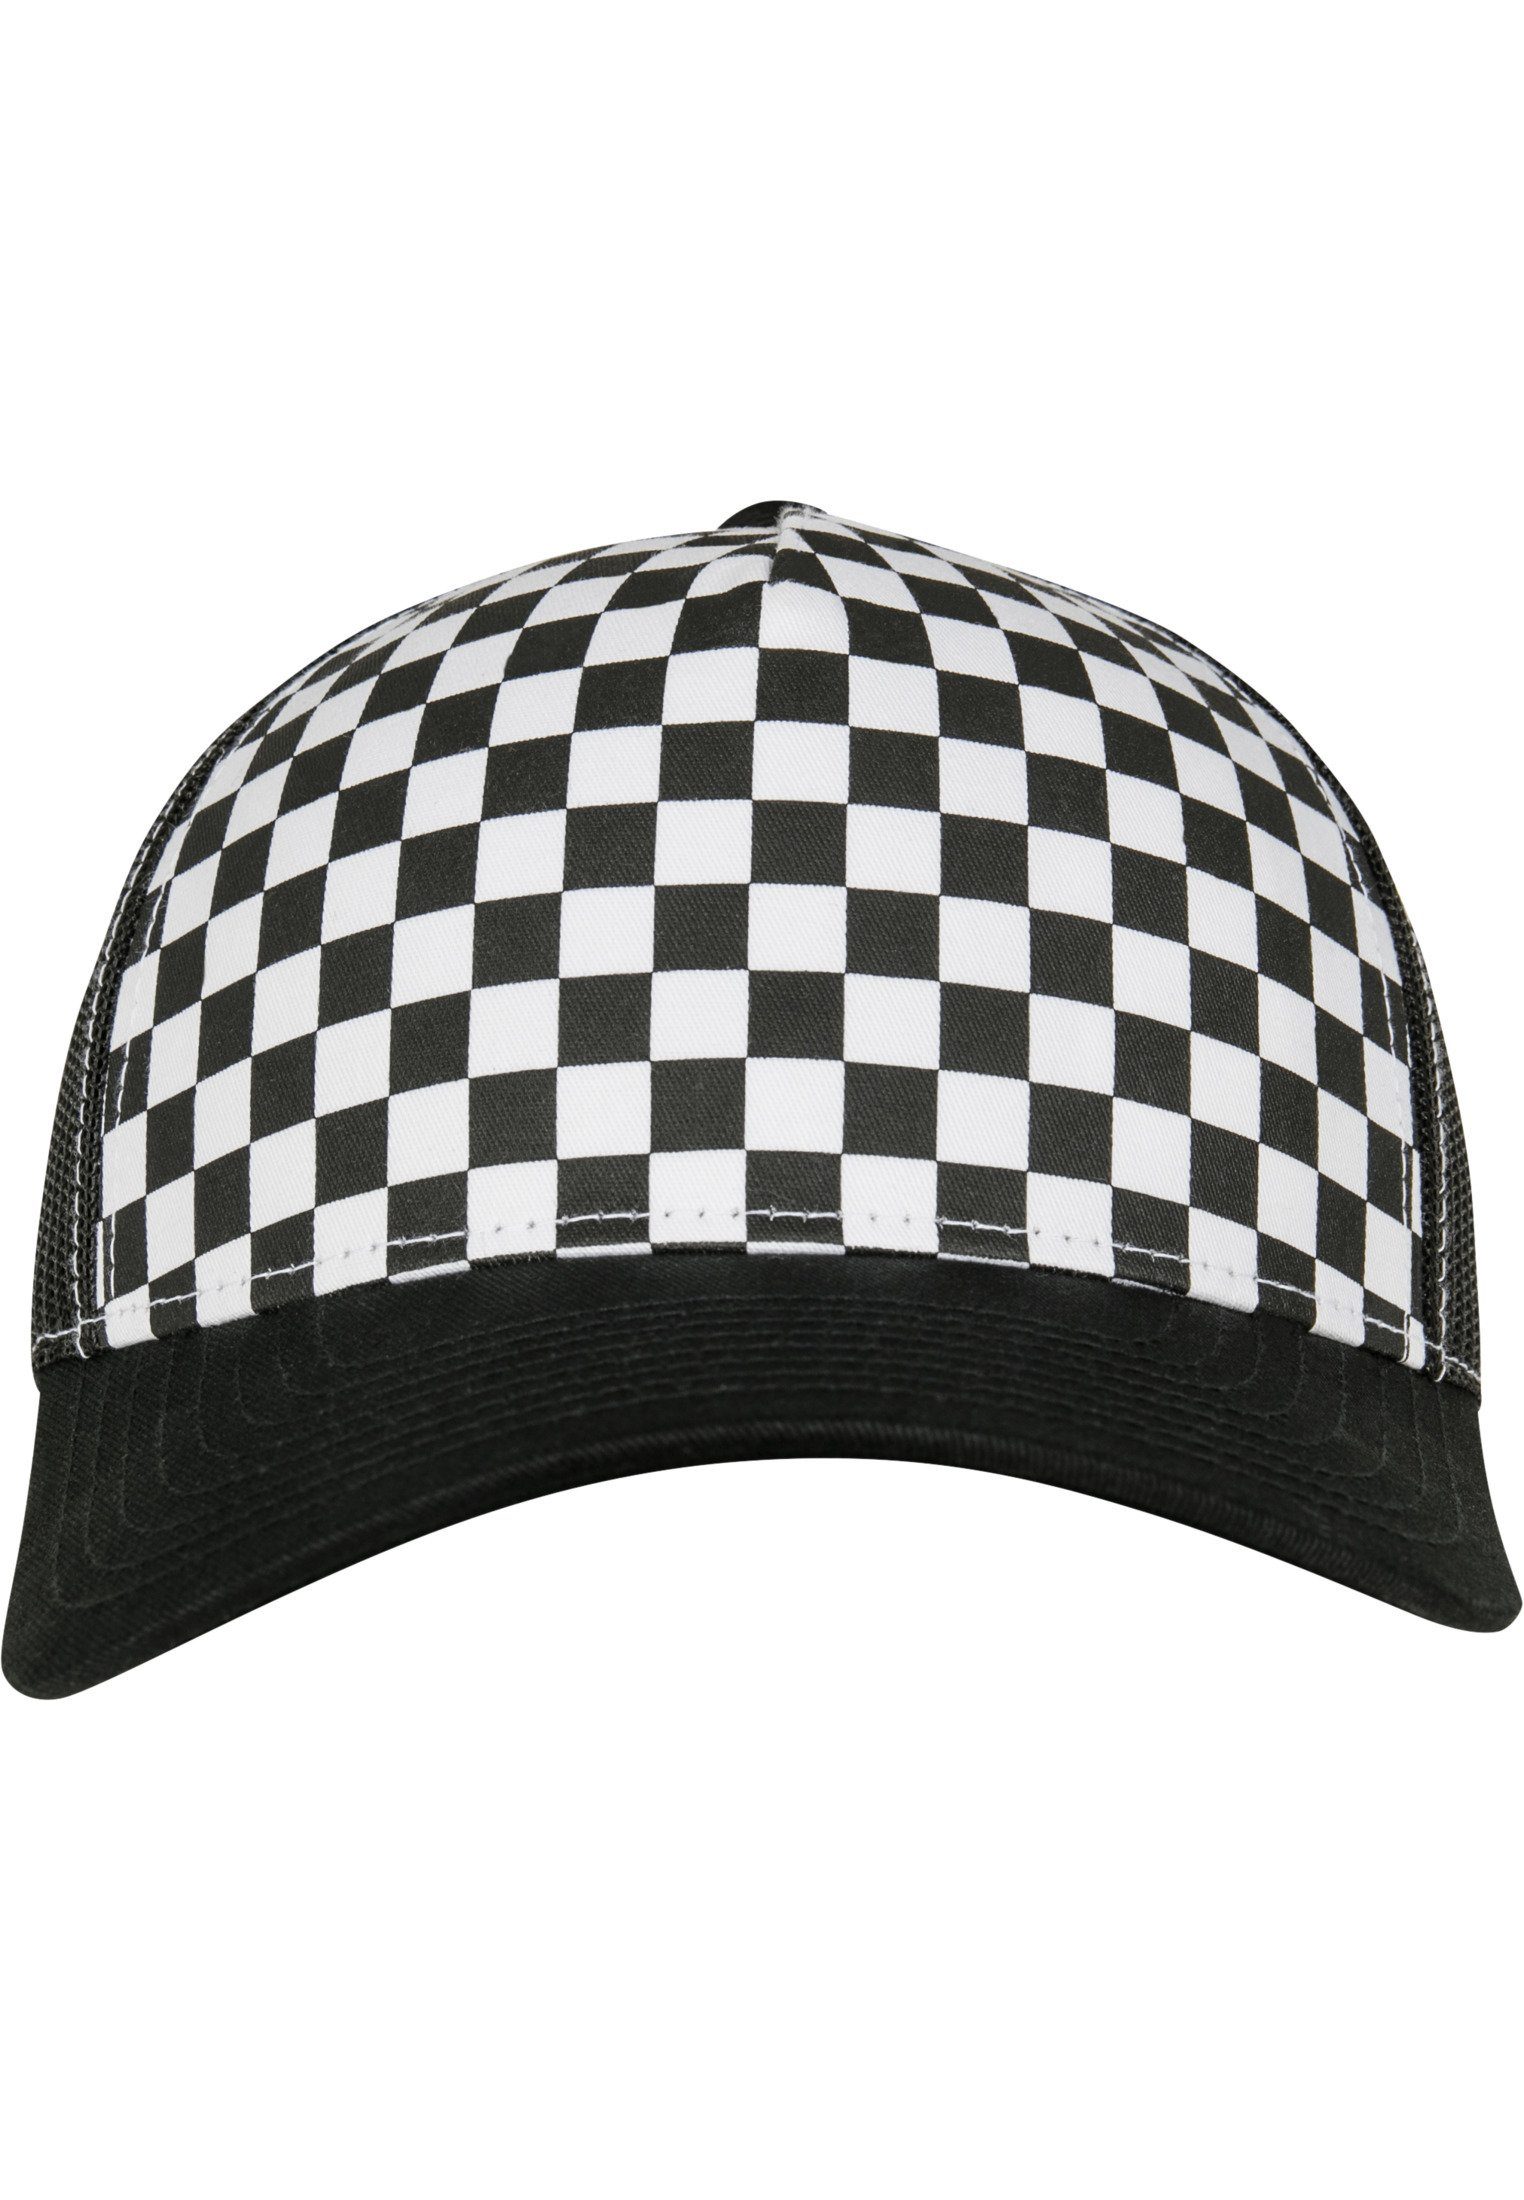 Trucker Cap Retro Checkerboard black/white Flexfit Flex Trucker